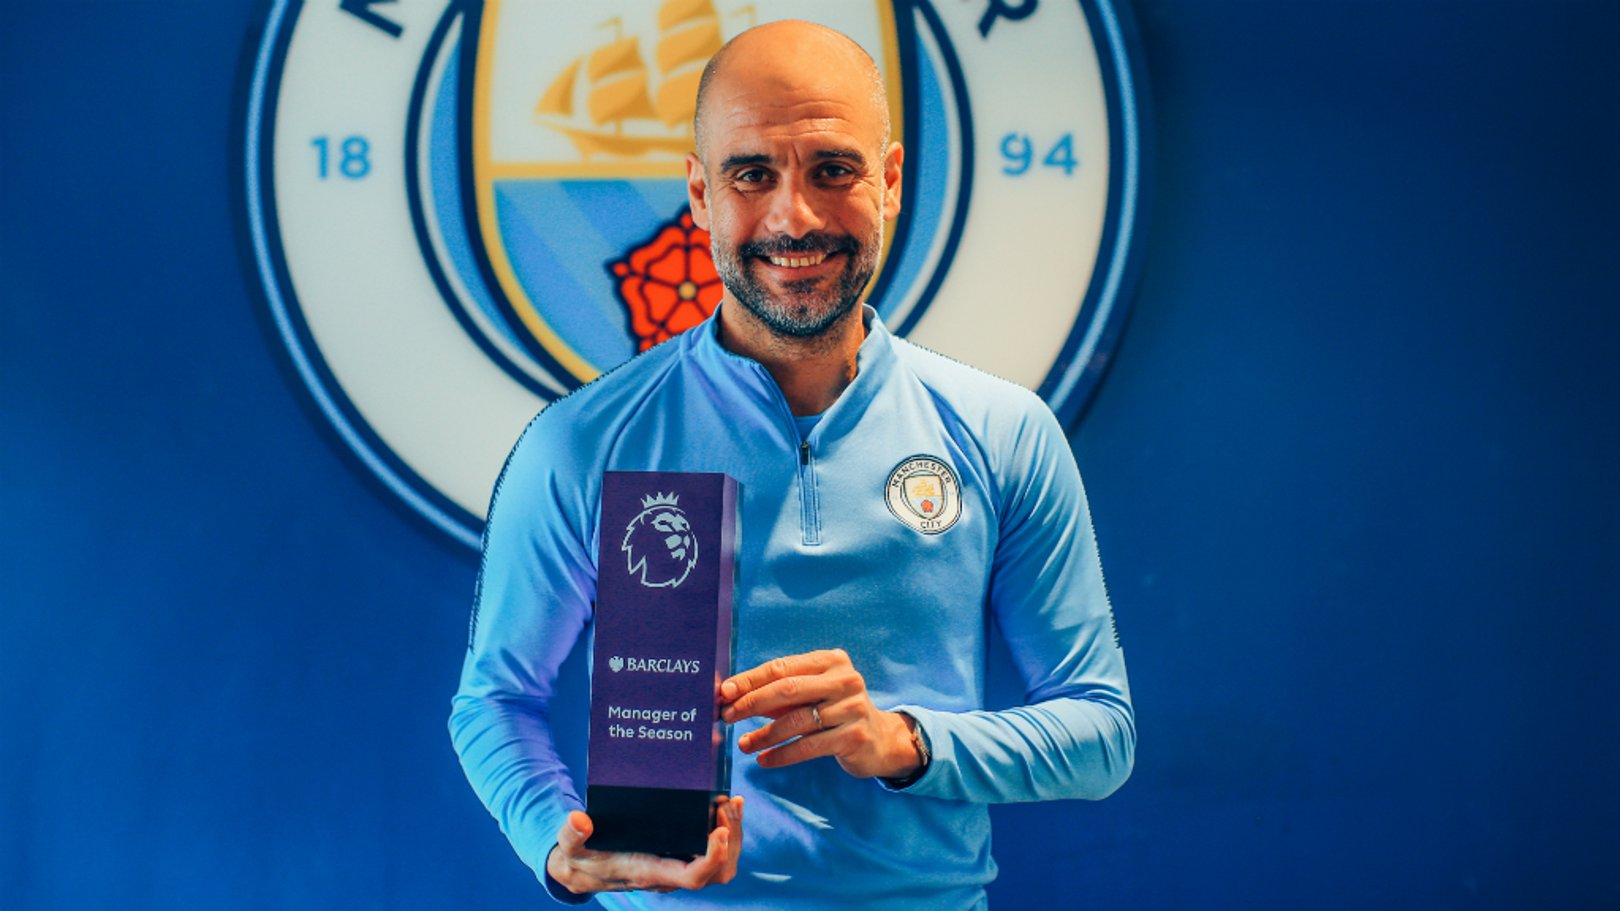 AWARD: Premier League Manager of the Season.